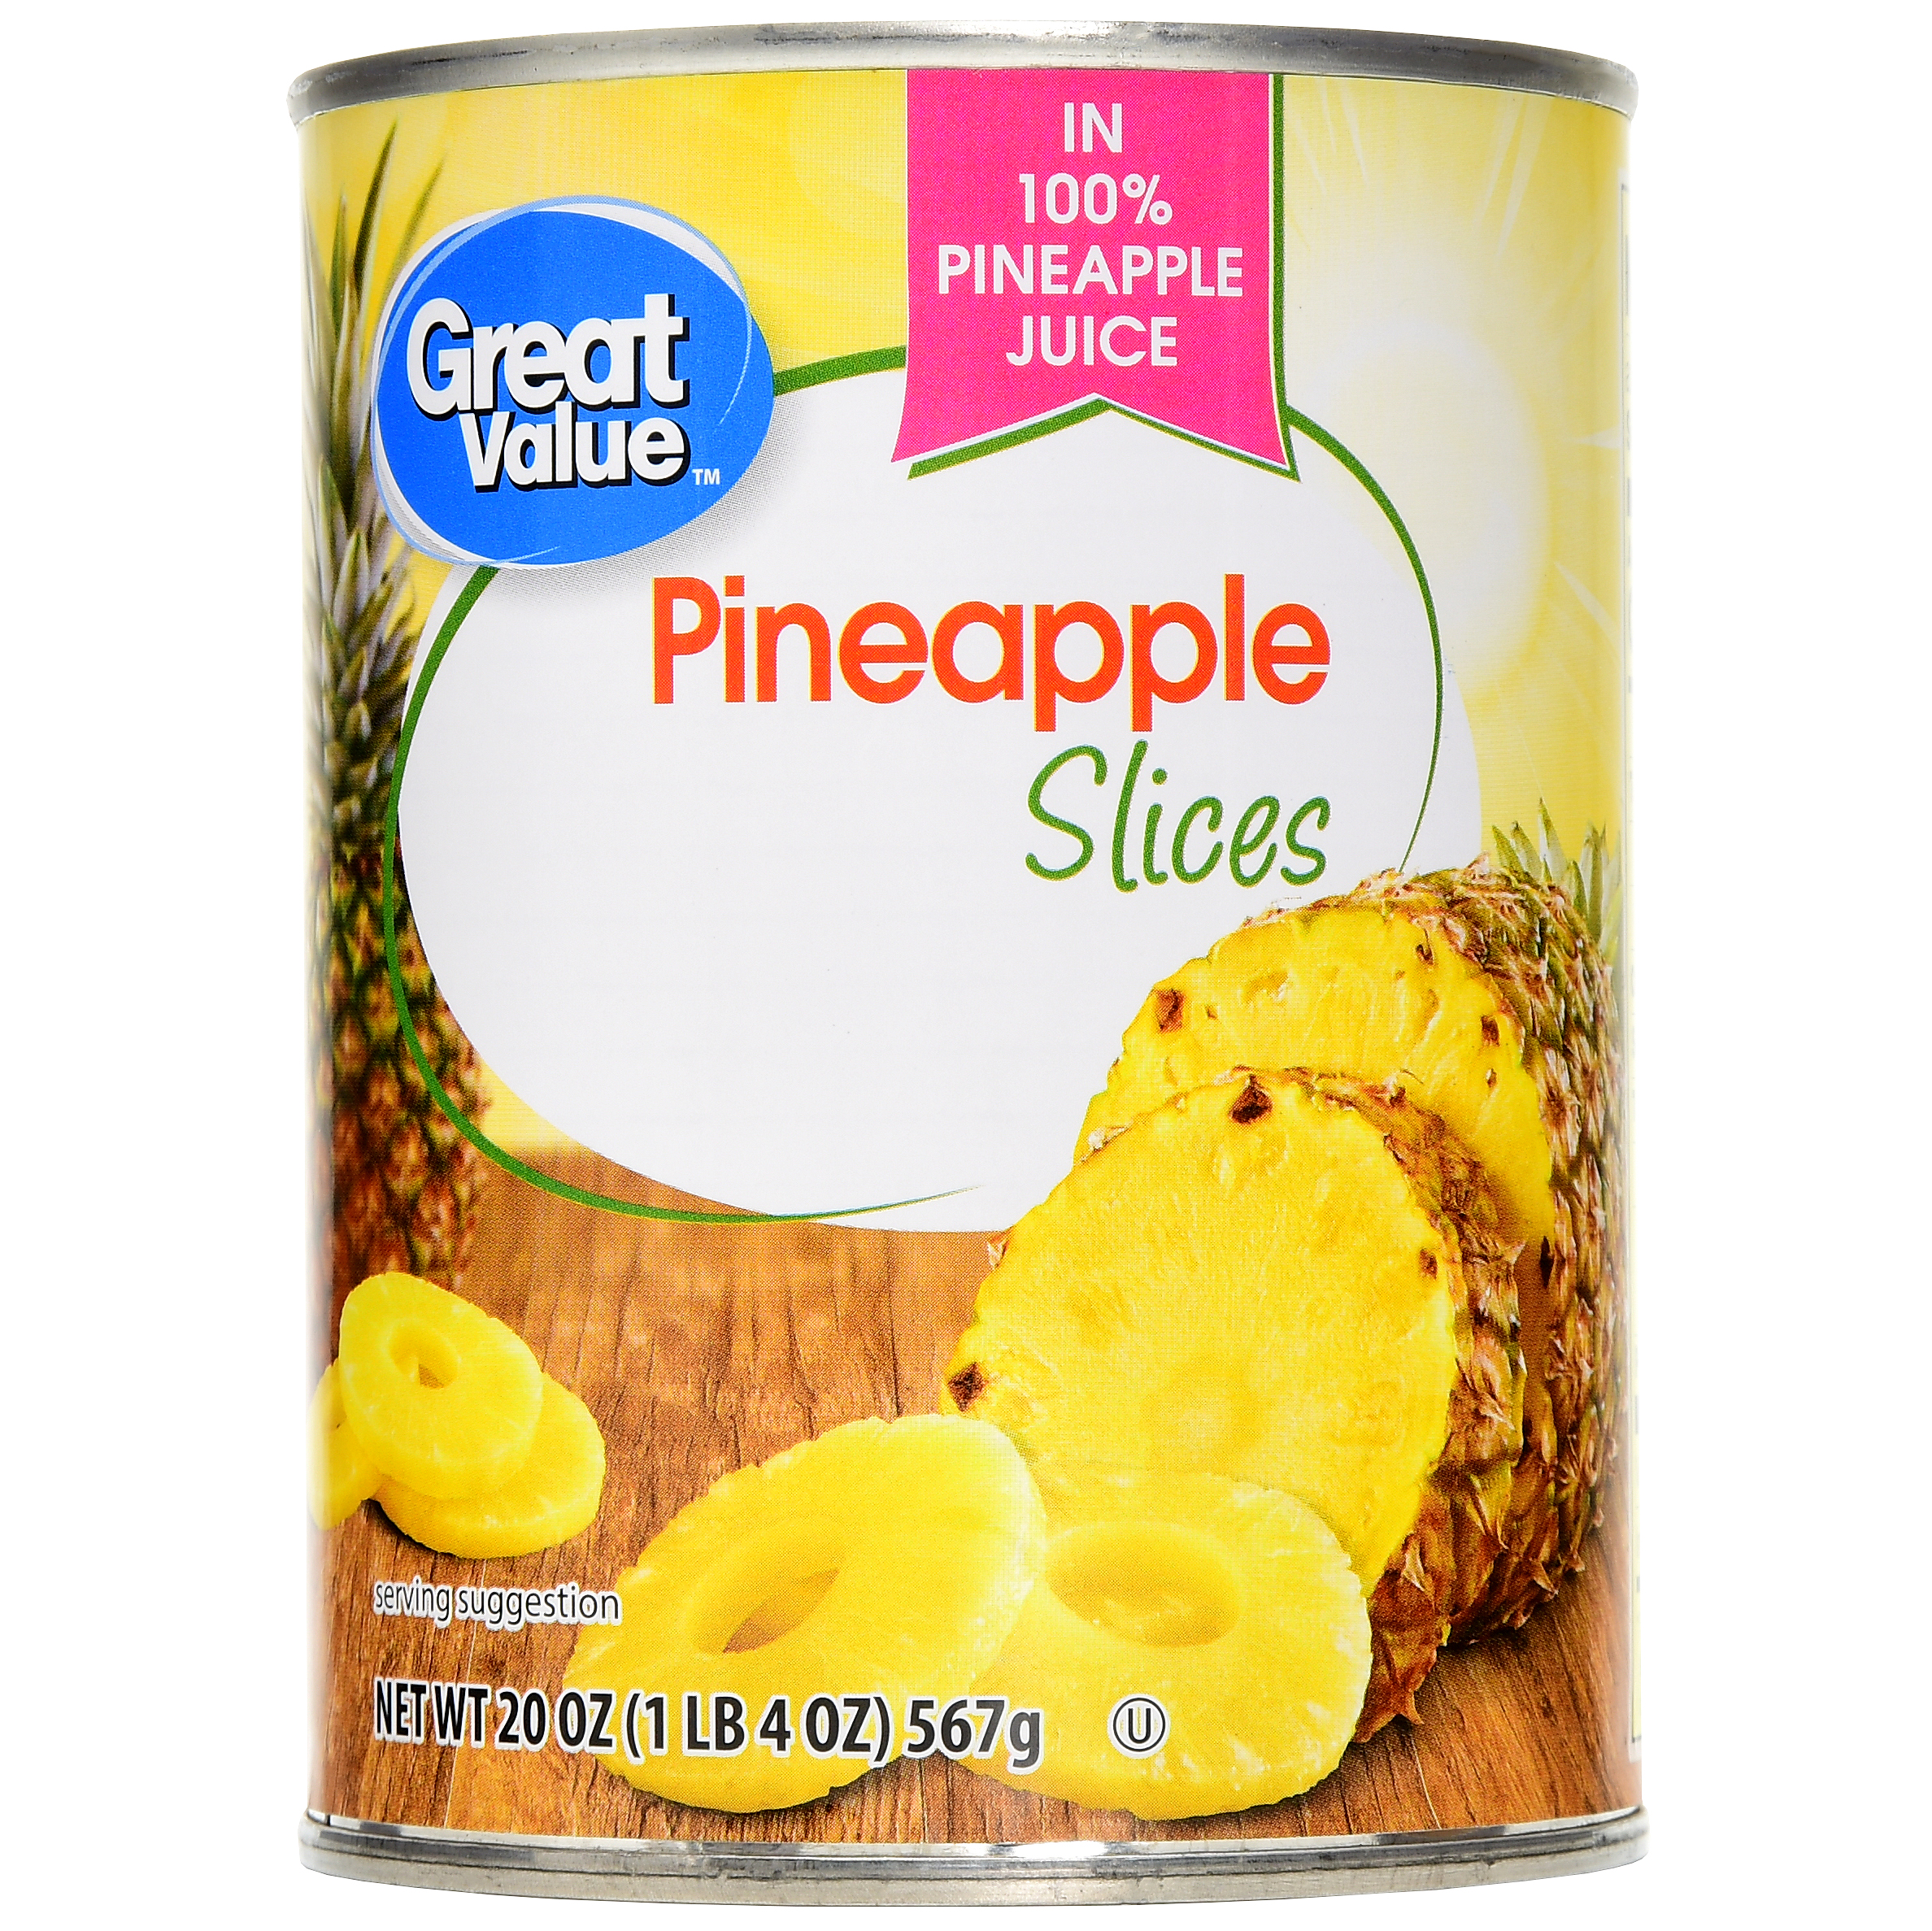 Great Value Pineapple Slices in 100% Juice, 20 oz - Walmart.com